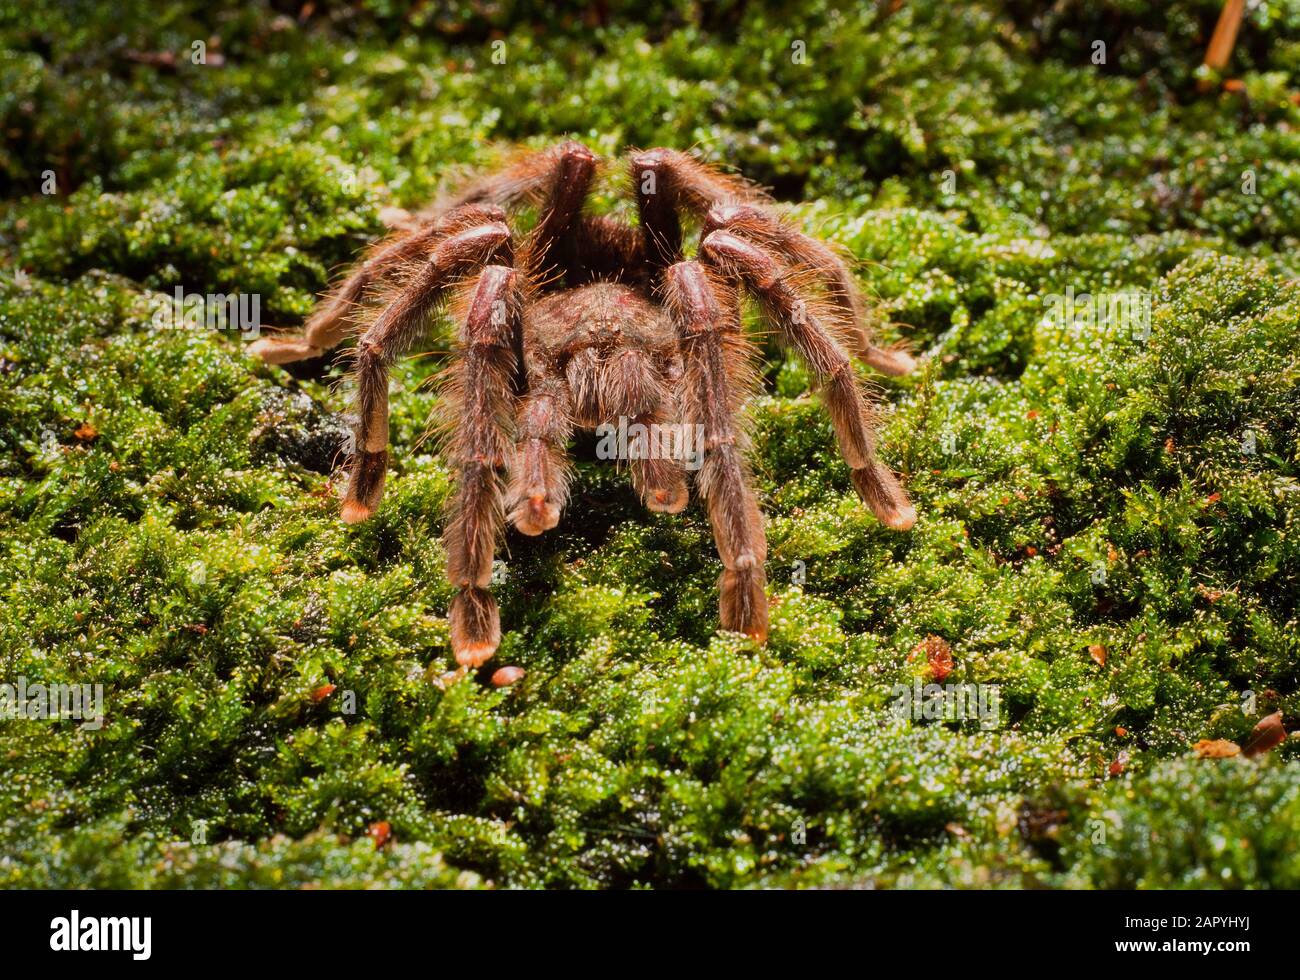 Tarantula spider, Aviculoria aviculaoria. On moss background Stock Photo